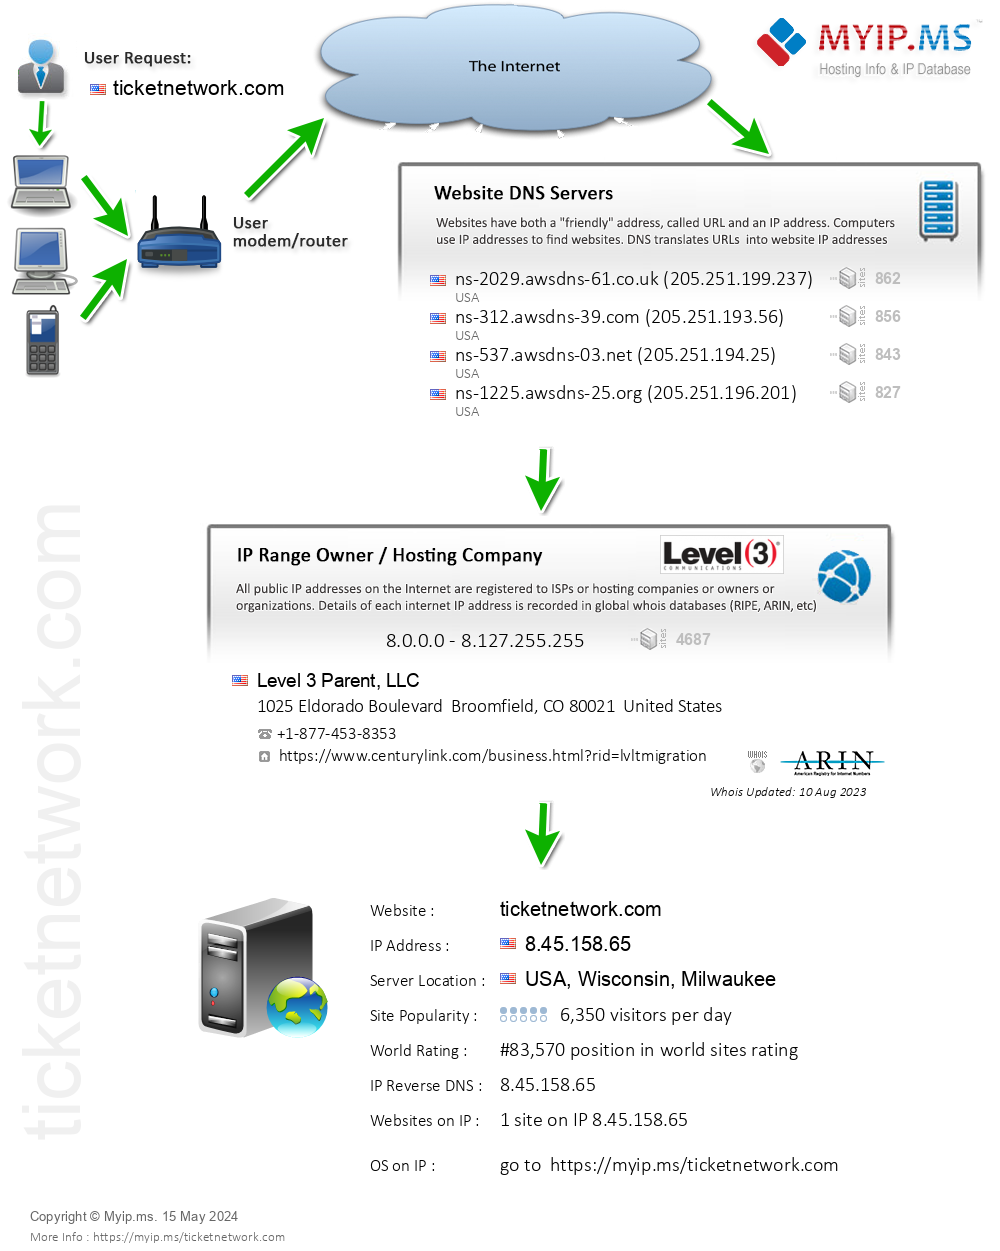 Ticketnetwork.com - Website Hosting Visual IP Diagram